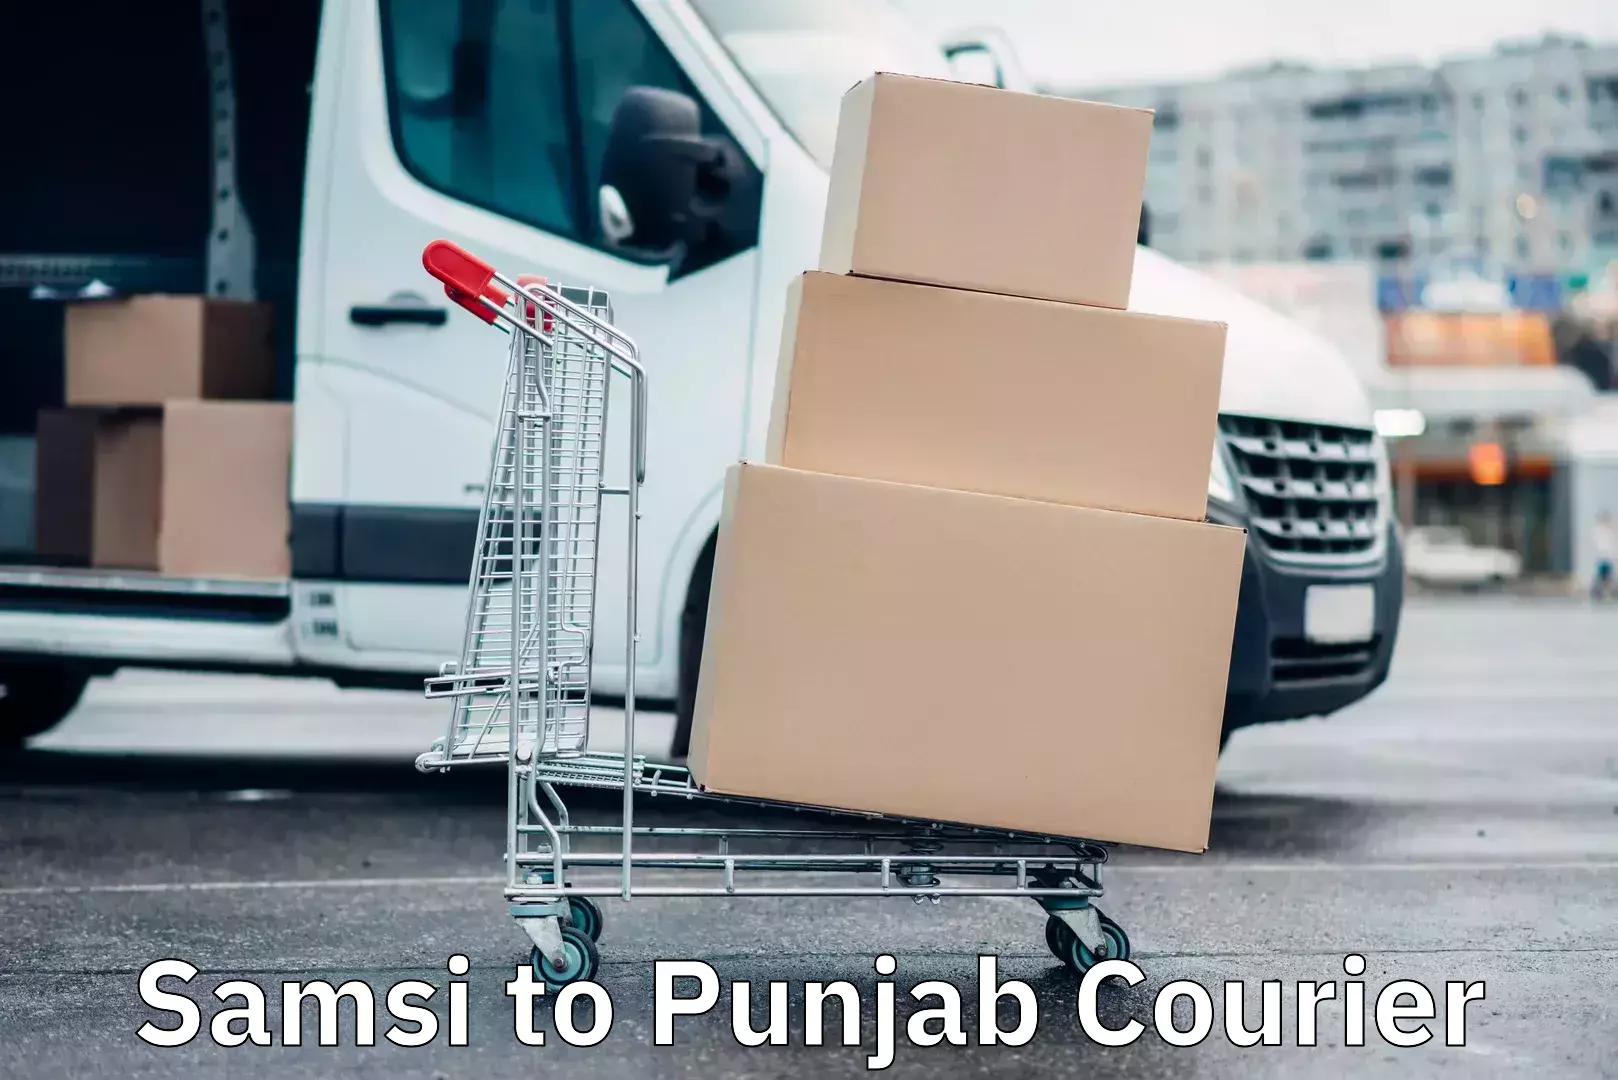 Nationwide courier service Samsi to Punjab